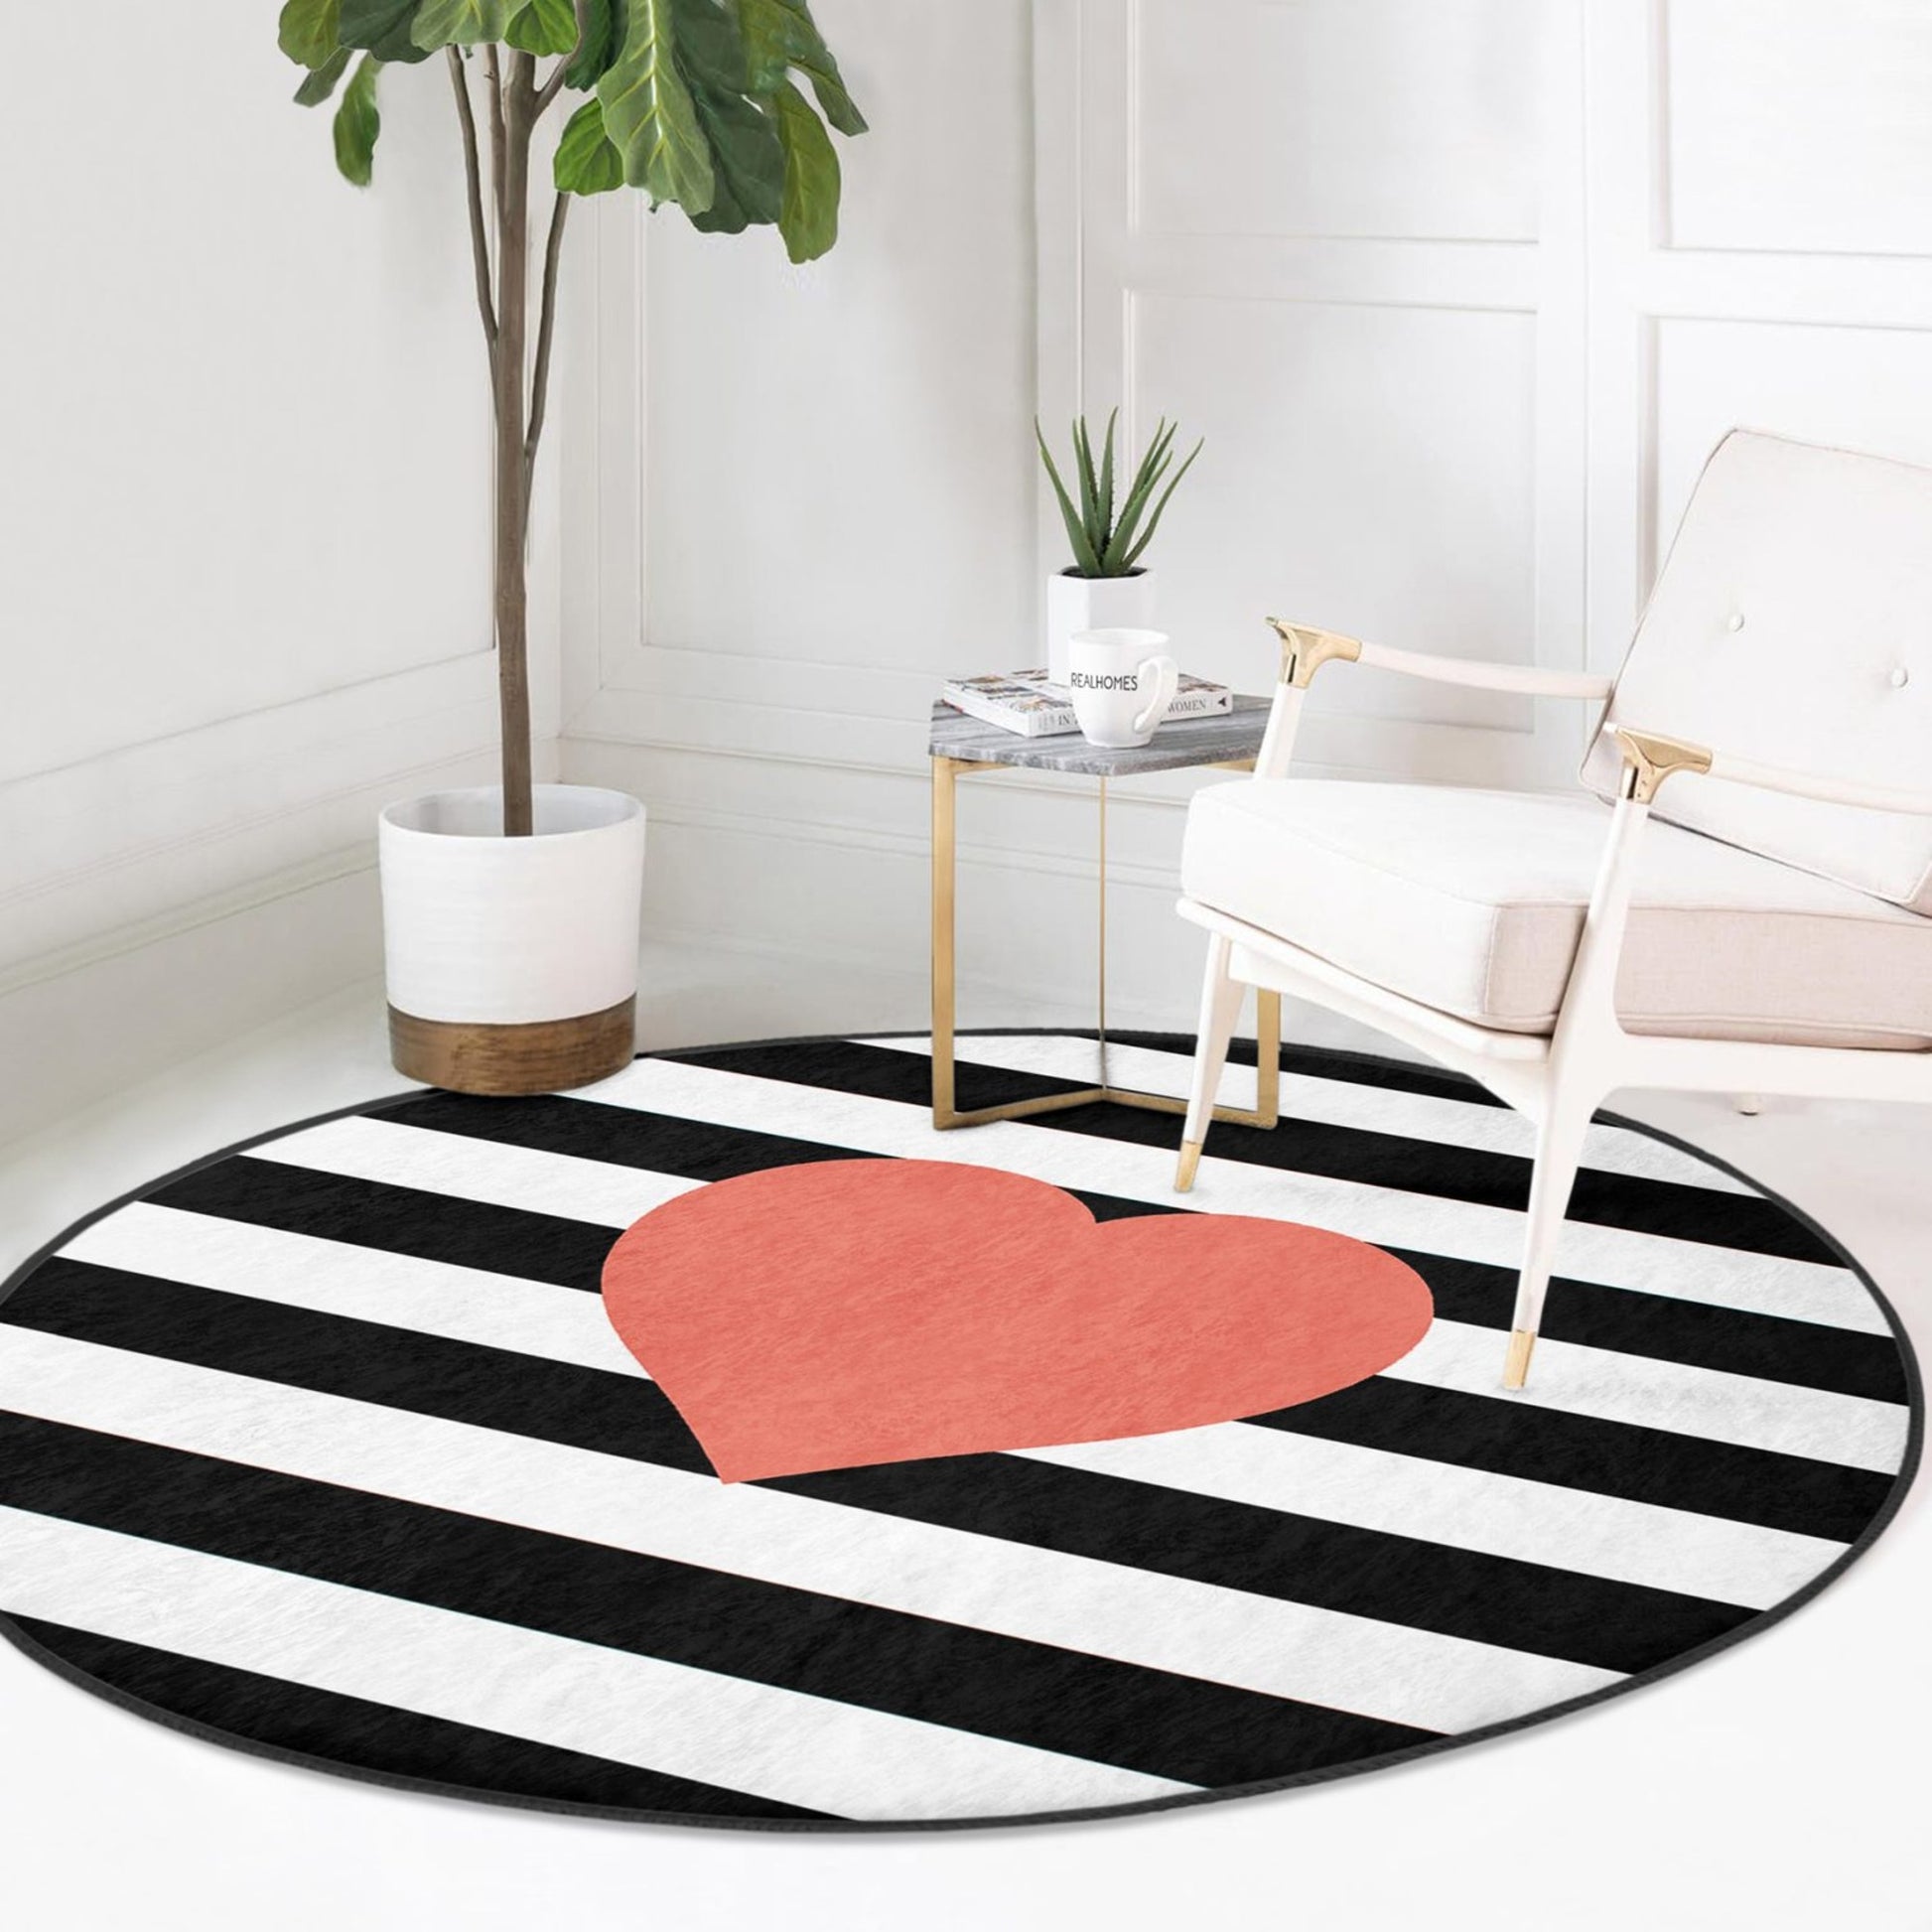 Elegant Black and White Round Rug - Love Pattern Bedroom Decor by Homeezone